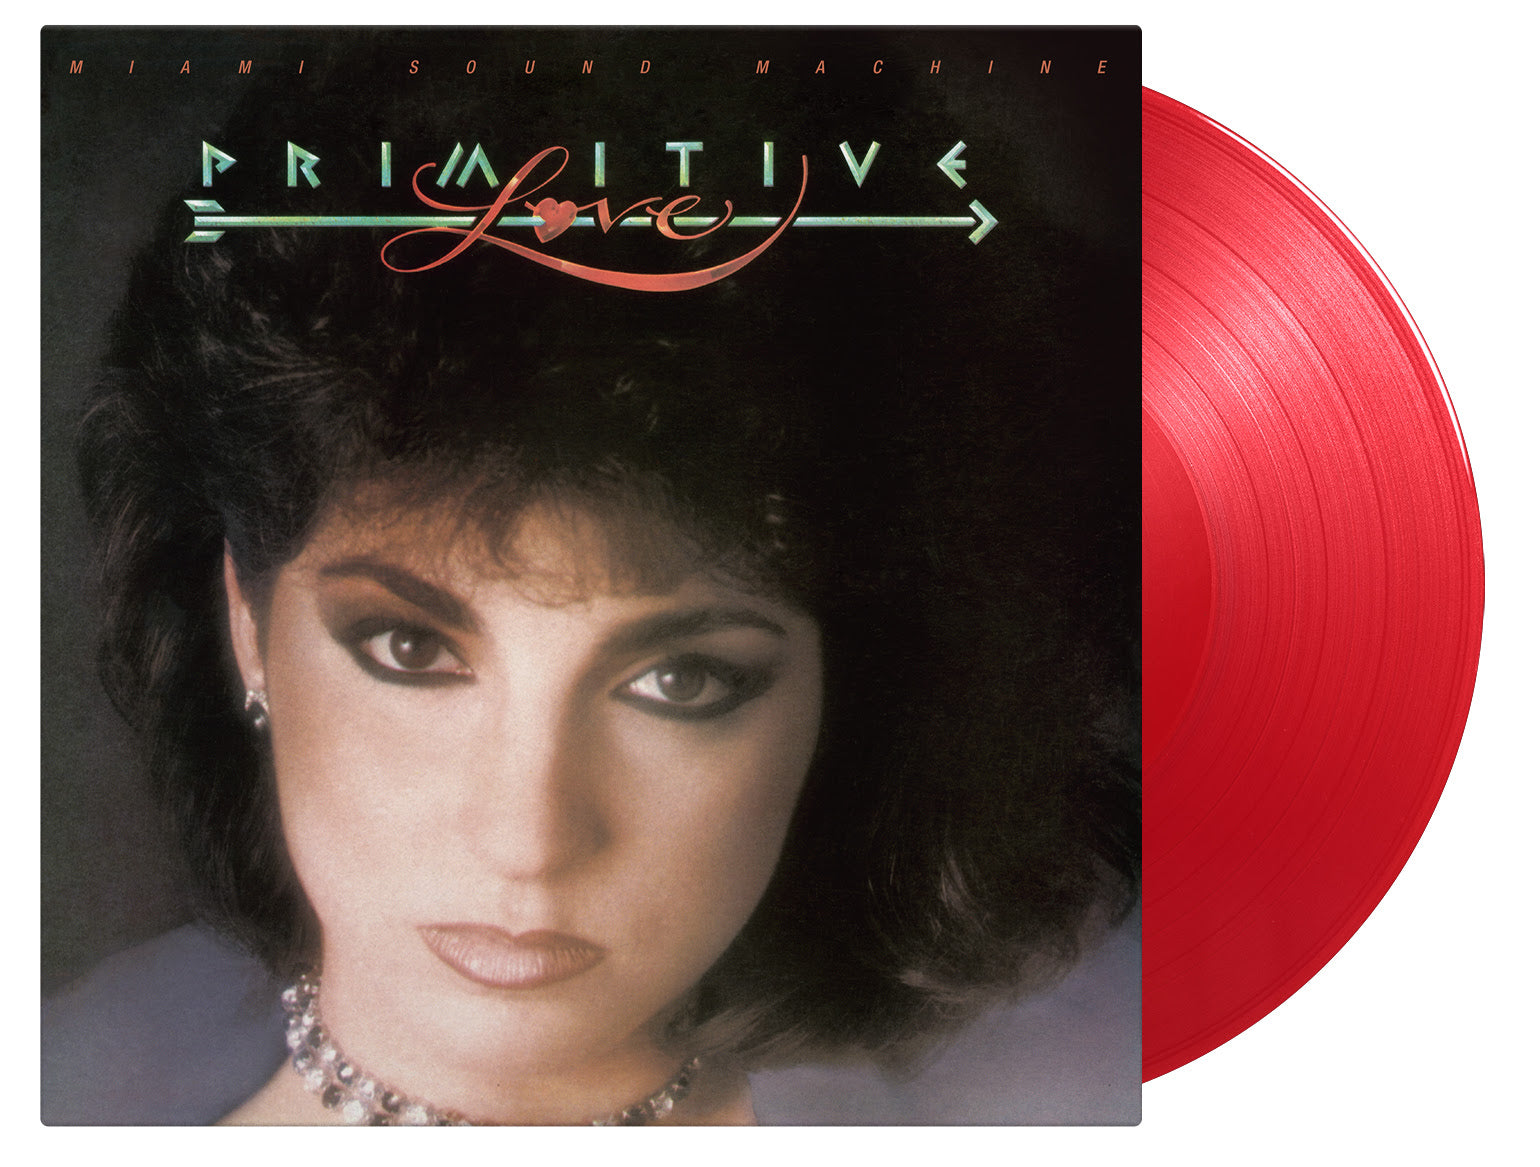 MIAMI SOUND MACHINE - Primitive Love - LP - Red Vinyl